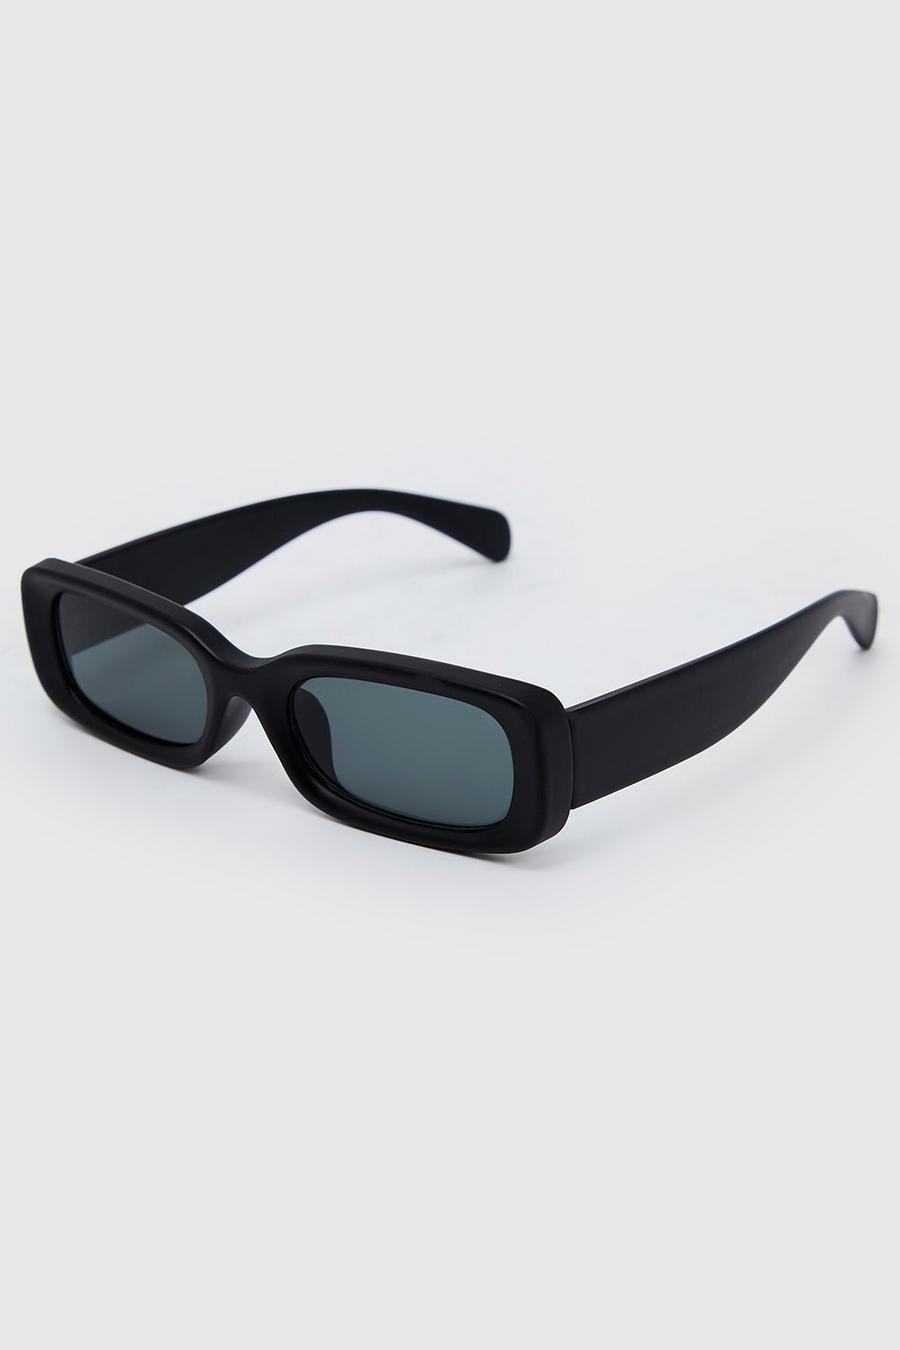 Klobige Sonnenbrile aus recyceltem Platik, Black schwarz